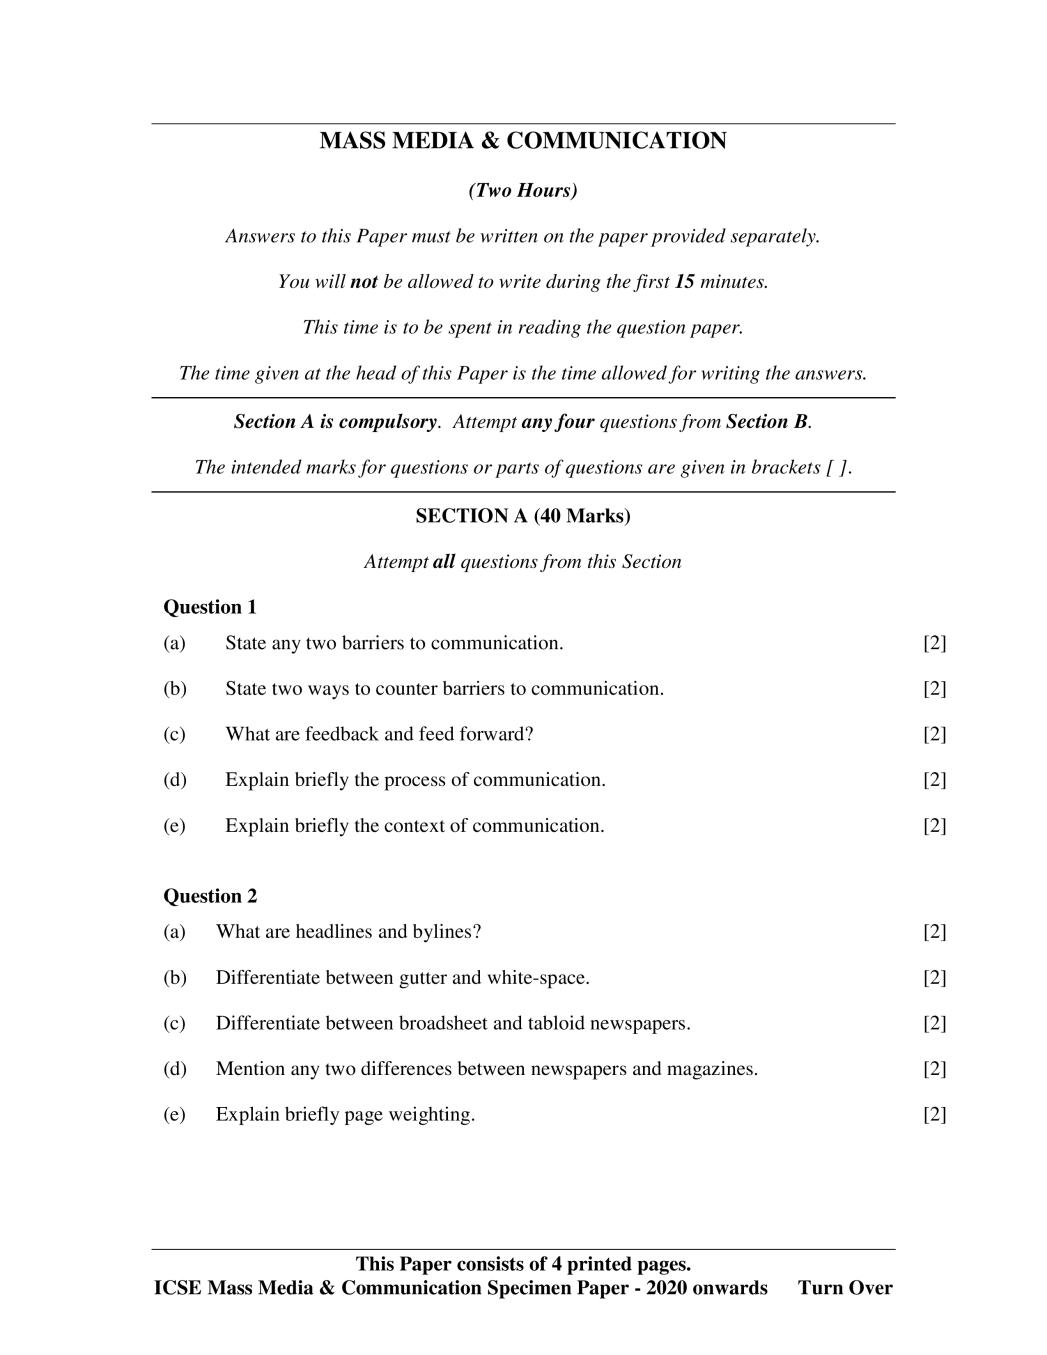 ICSE Class 10 Specimen Paper 2020 for Mass Media Communication  - Page 1